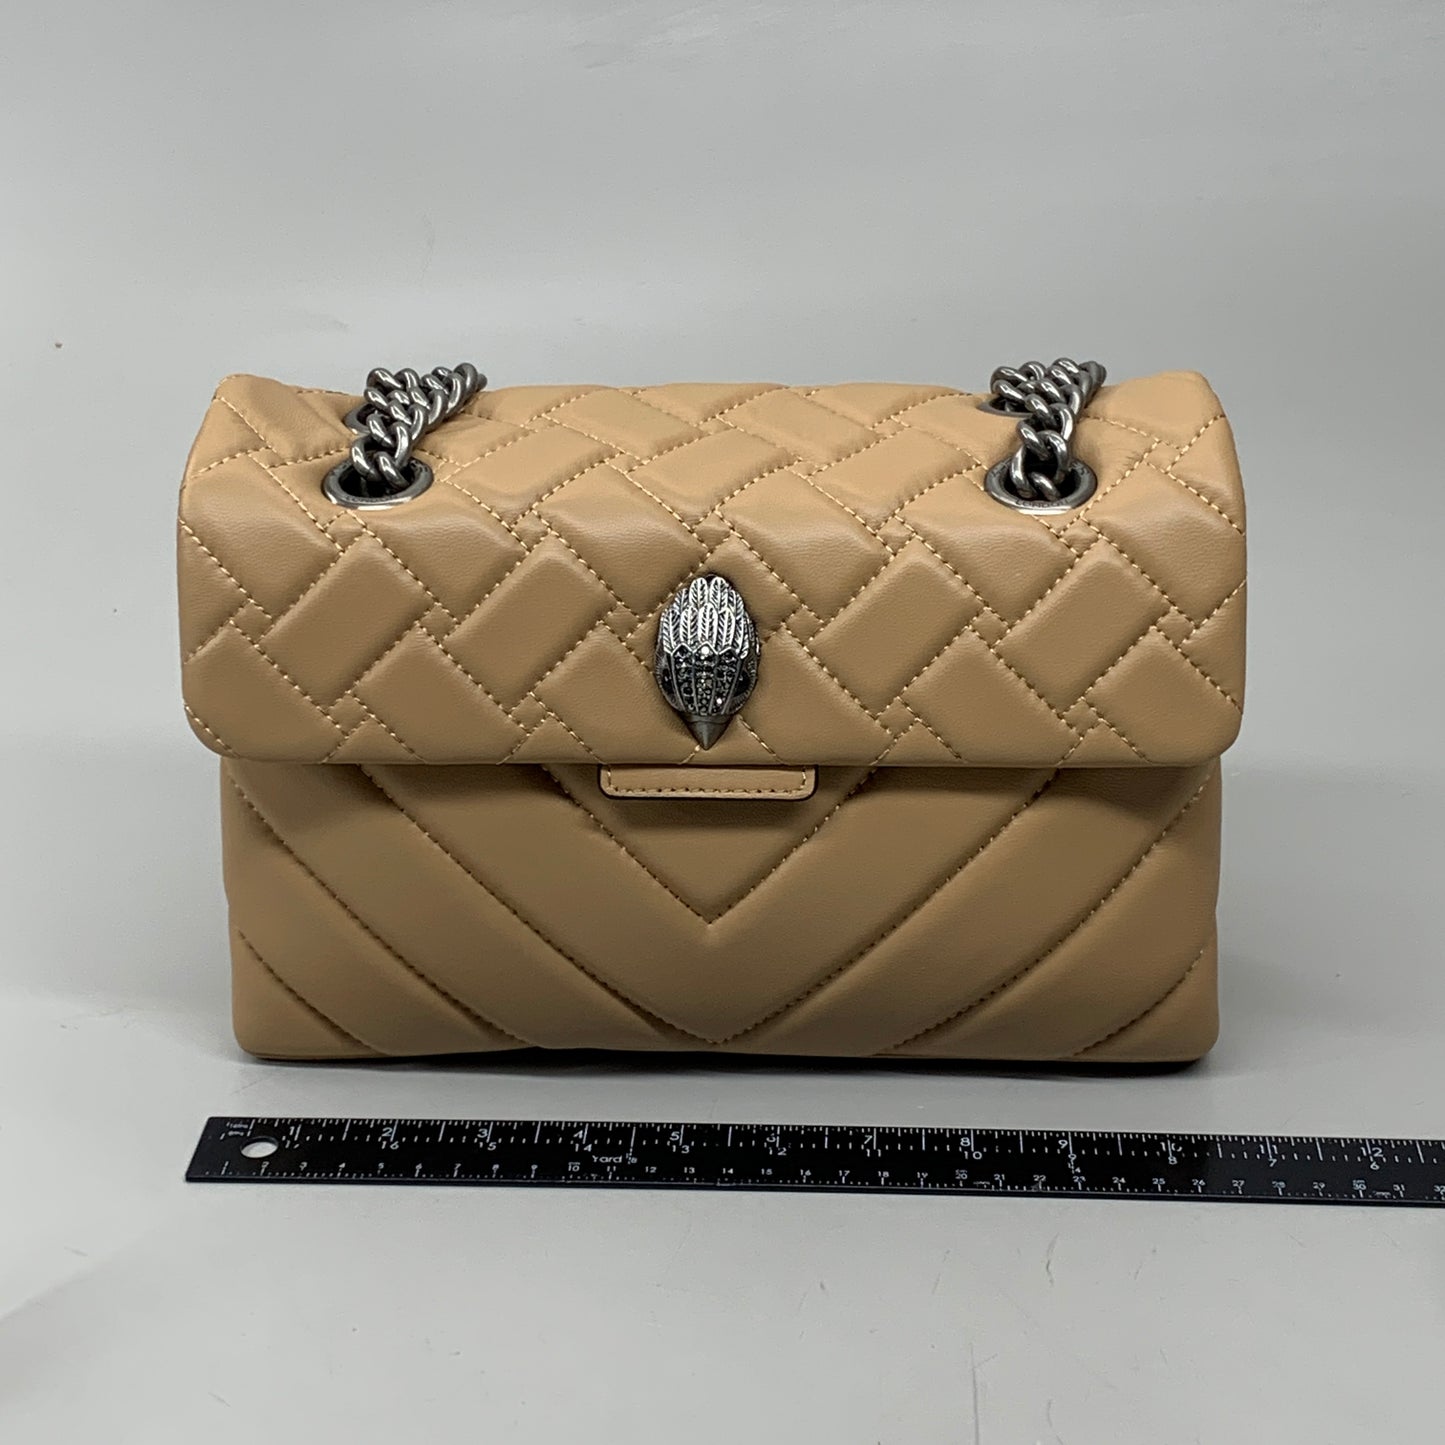 KURT GEIGER Kensington Leather X Bag 10.5" x 7" Camel 1470448109 New